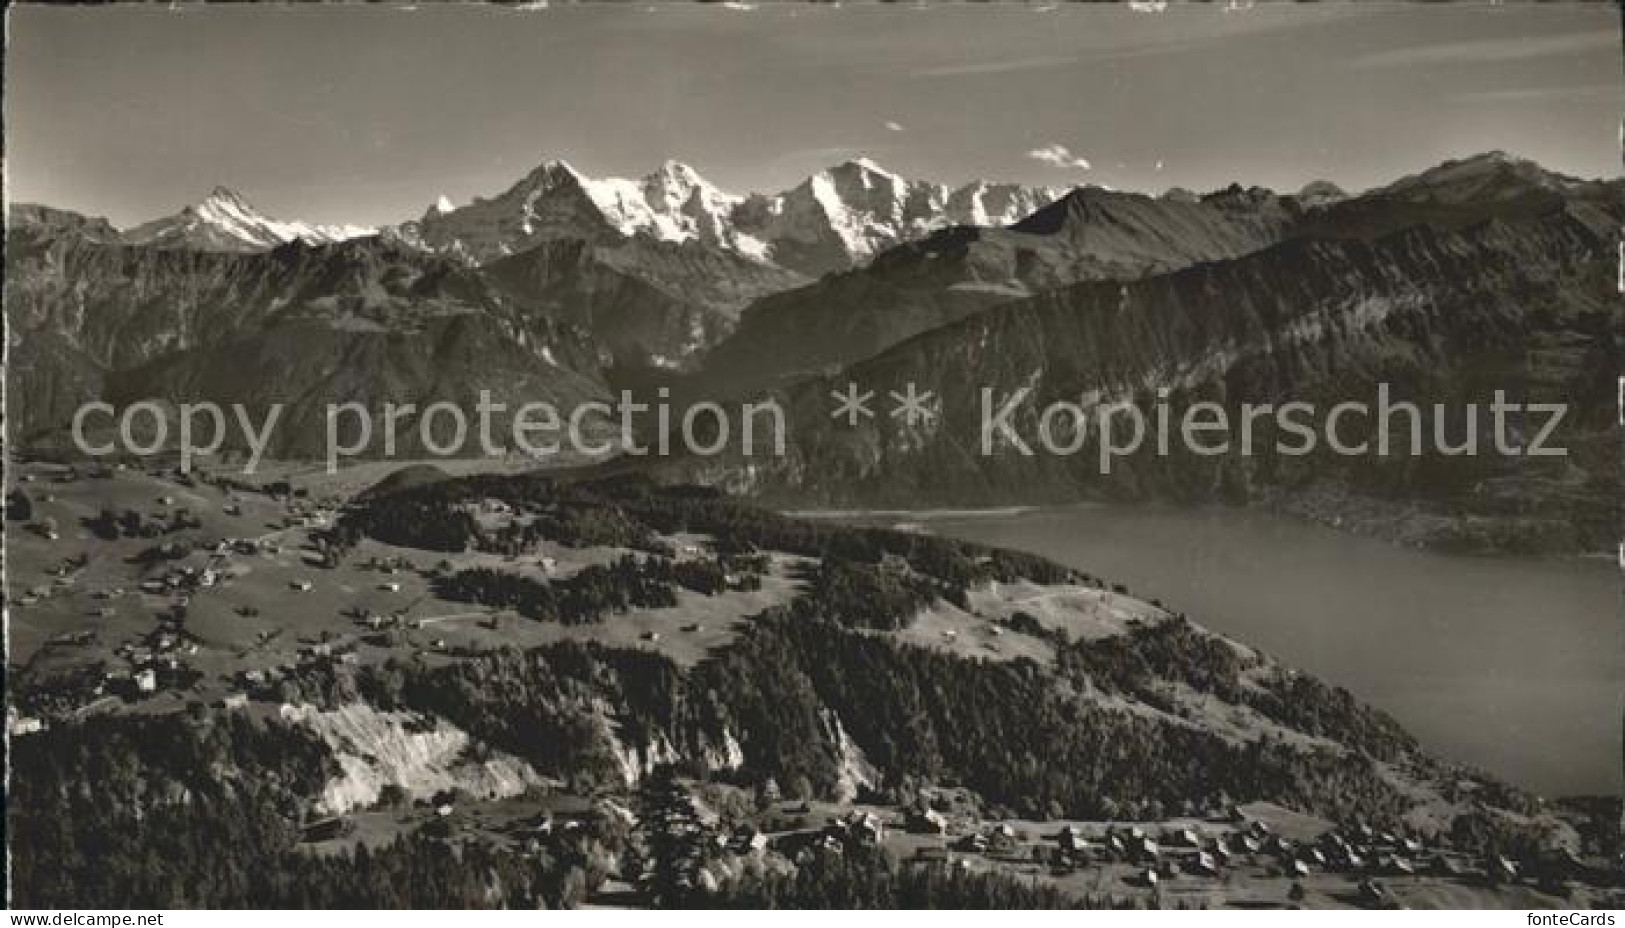 11762626 Beatenberg Mit Schreckhorn Finsteraarhorn Eiger Moench Jungfrau Beatenb - Other & Unclassified